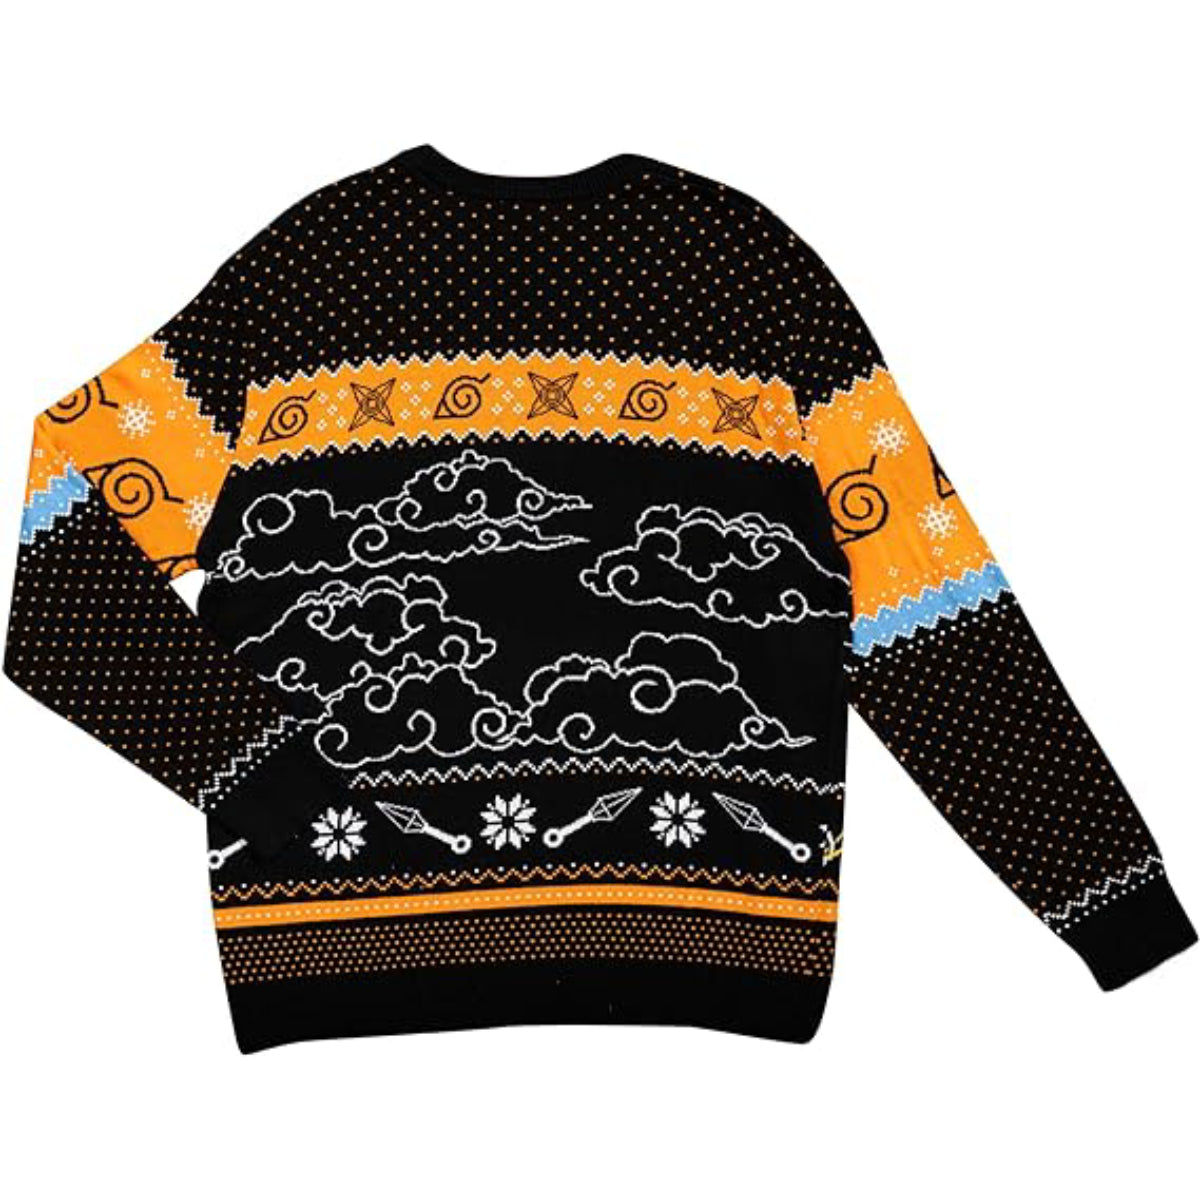 Naruto Ship Chibi Sweater back